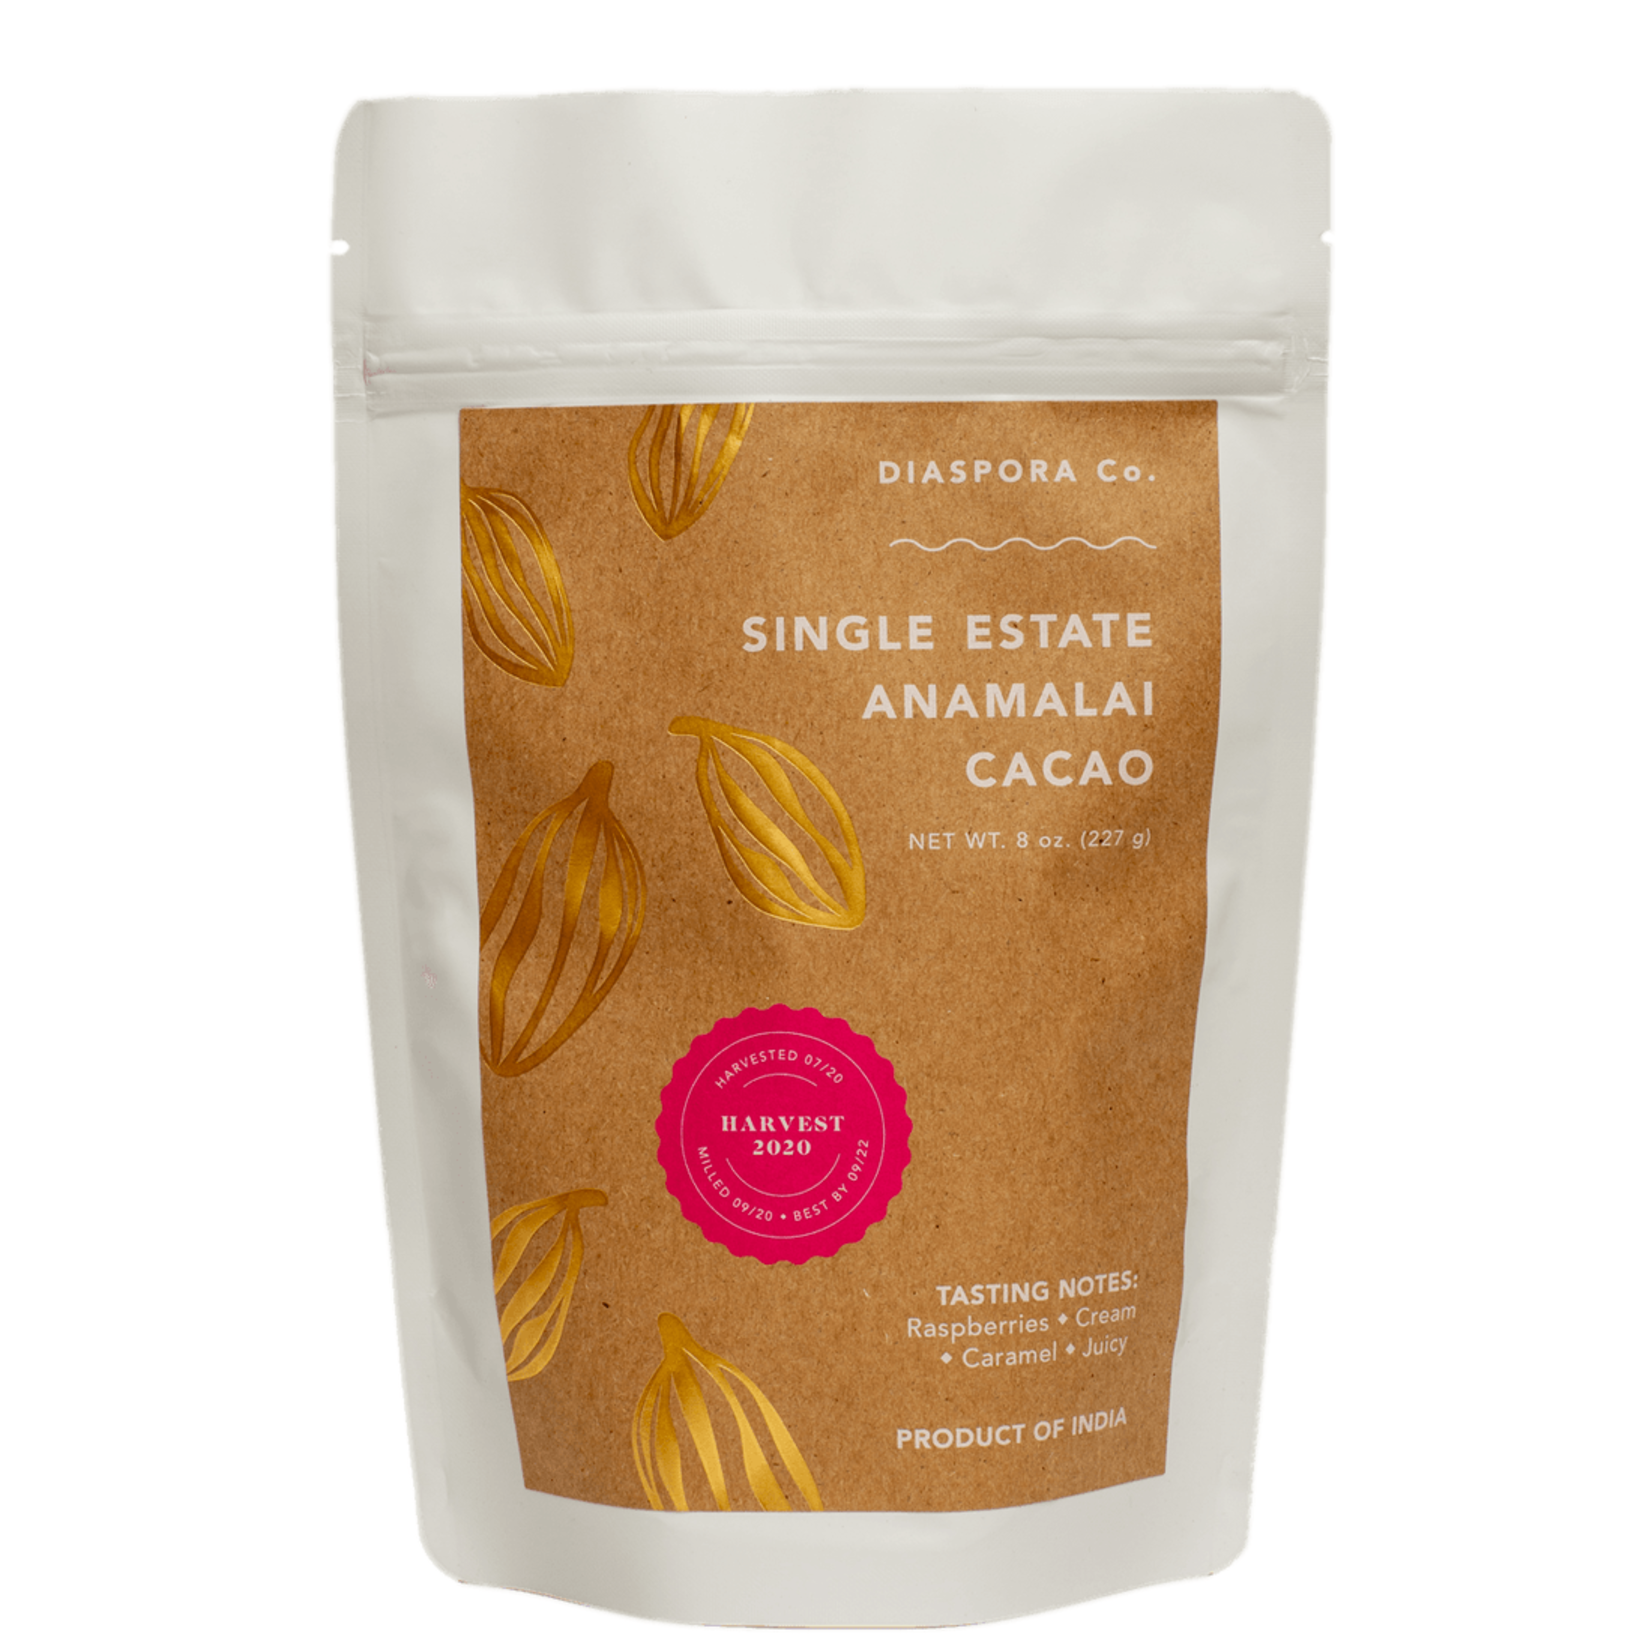 Diaspora Co. cacao powder (single estate Anamalai)